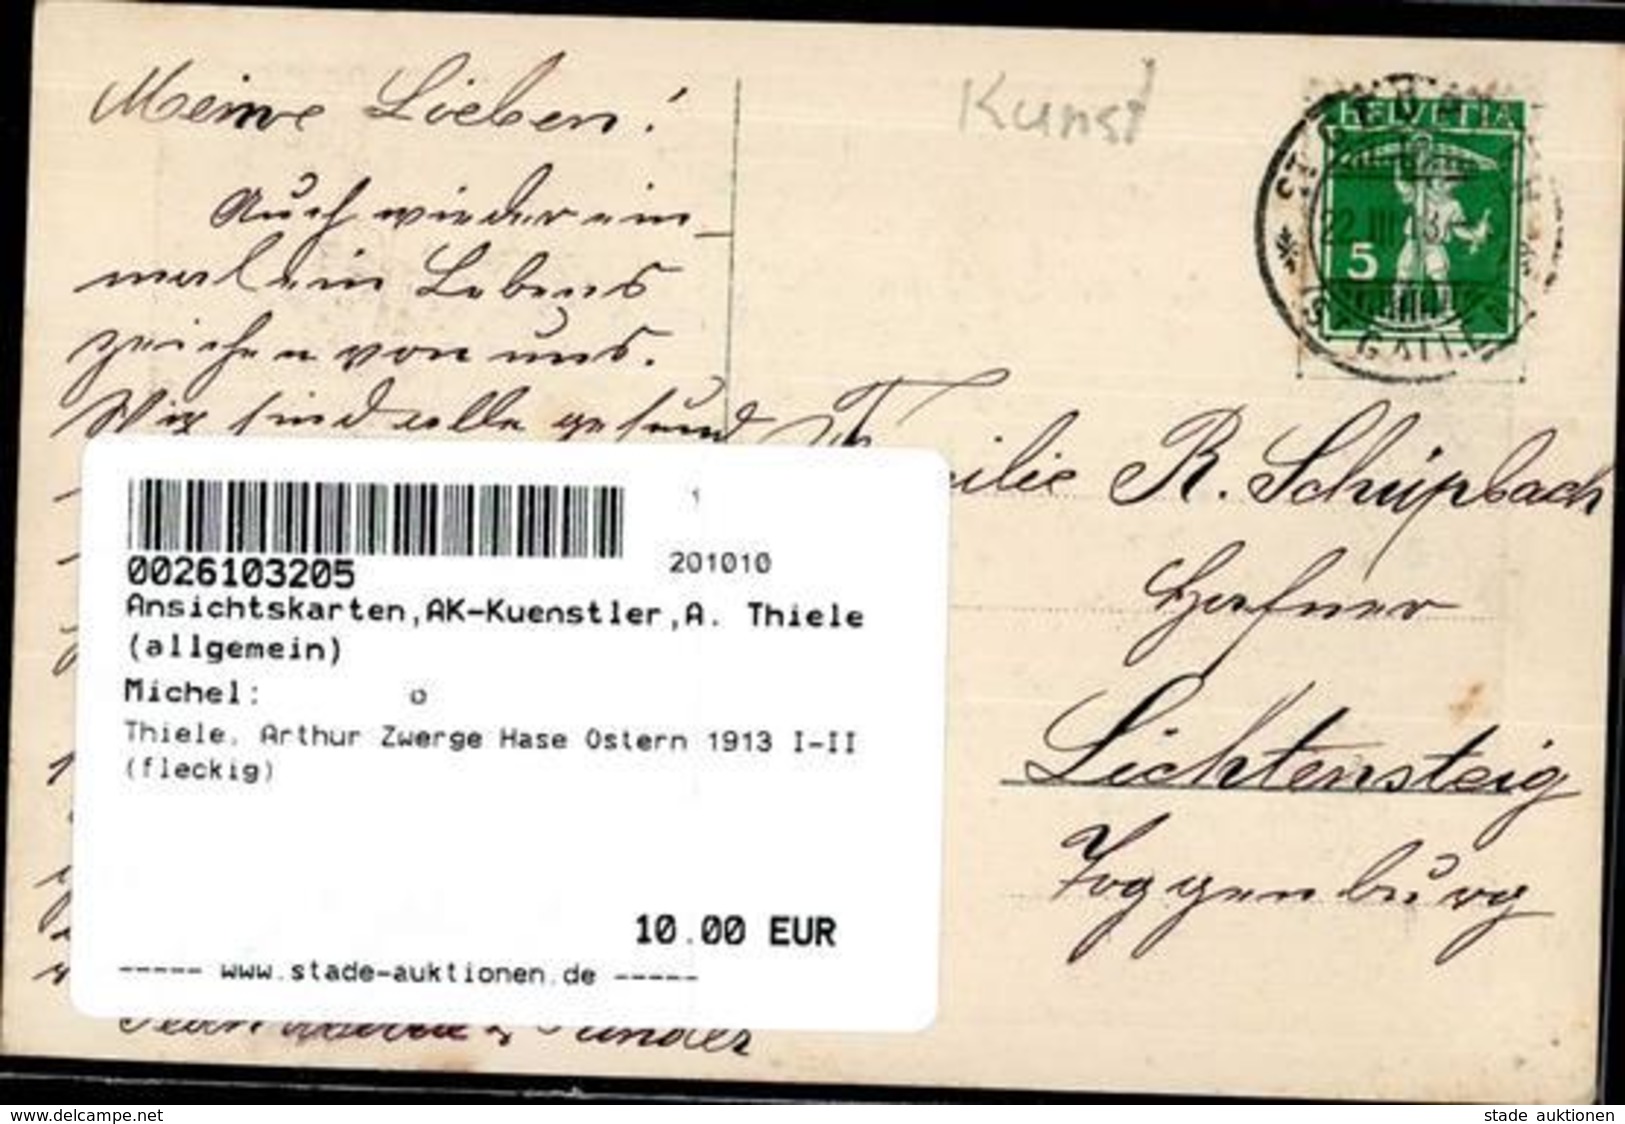 Thiele, Arthur Zwerge Hase Ostern 1913 I-II (fleckig) Lutin Paques - Thiele, Arthur